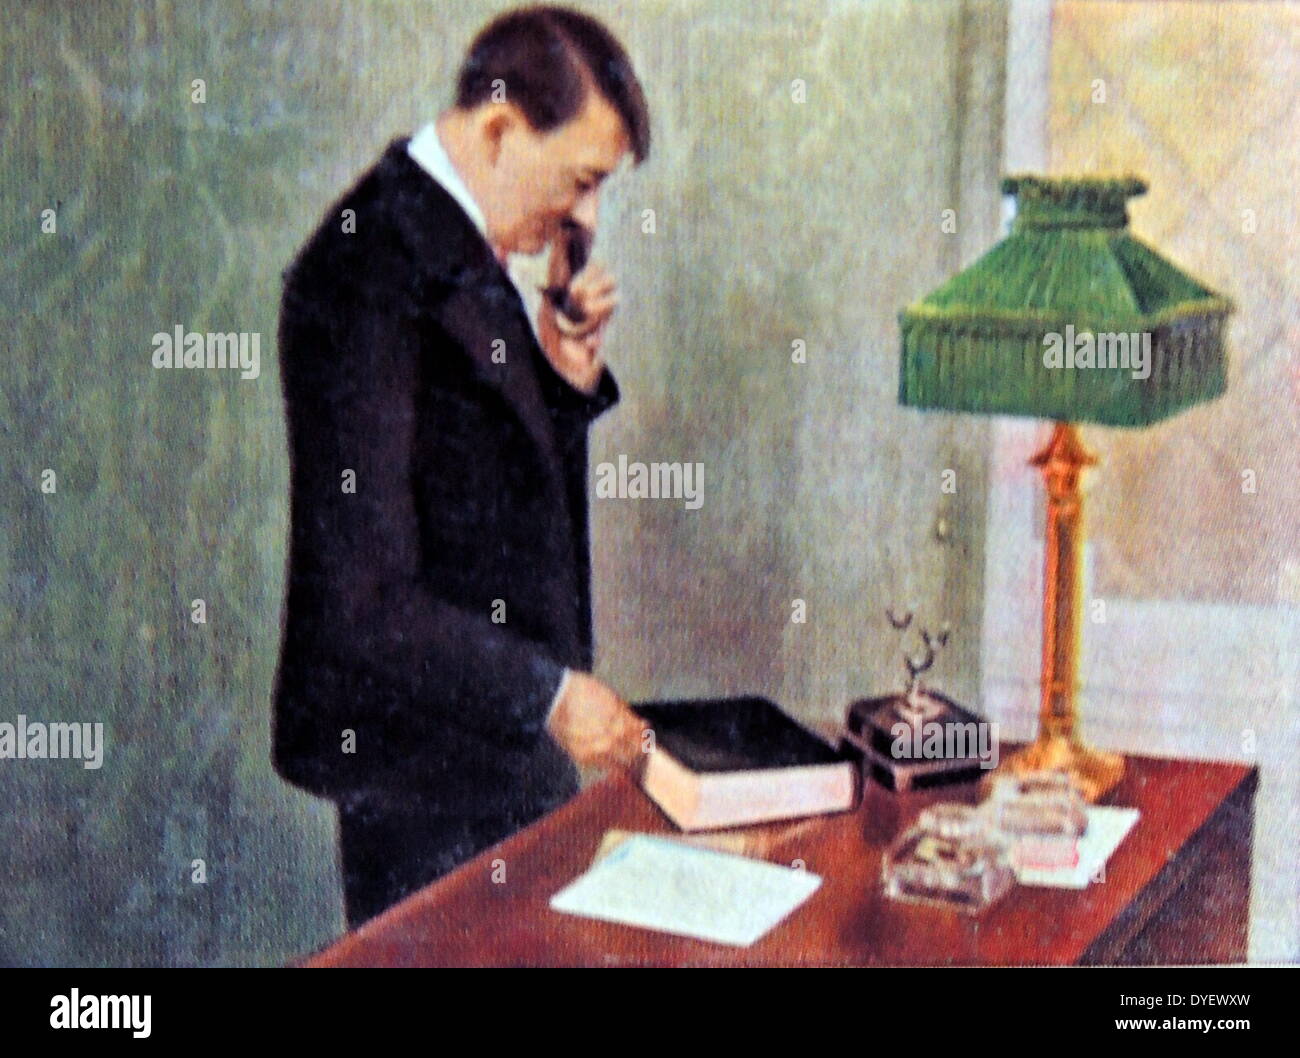 Adolf Hitler spricht am Telefon in Berlin ca. 1934 Stockfotografie - Alamy